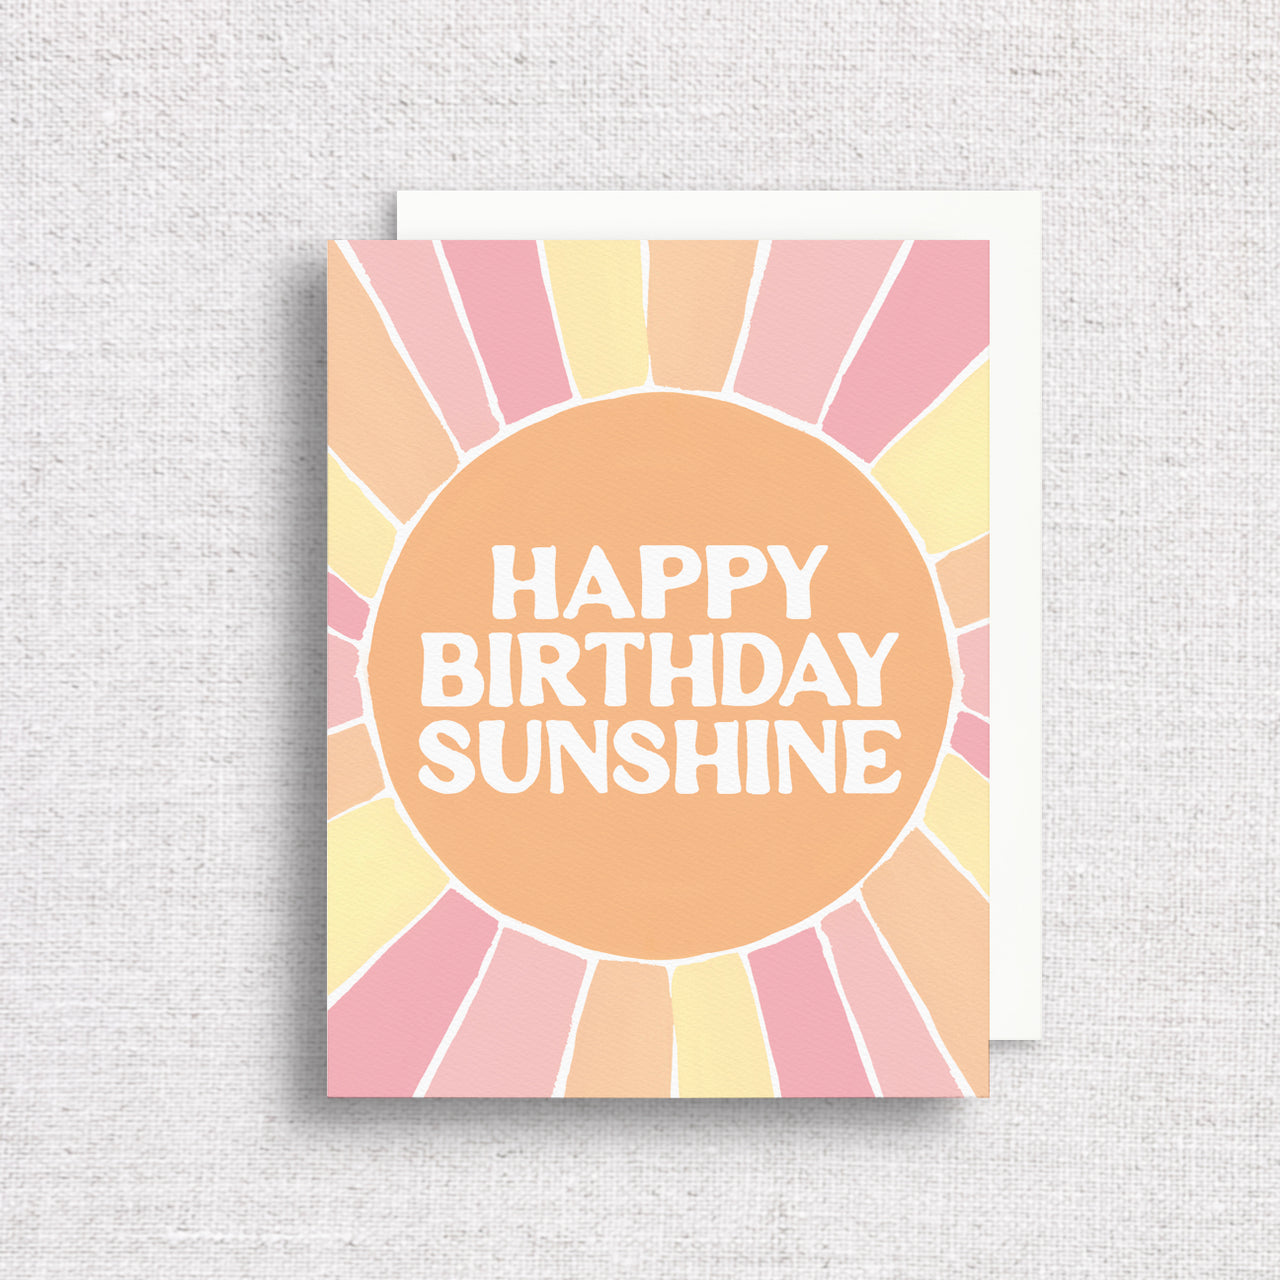 Happy Birthday Sunshine Greeting Card by Gert & Co